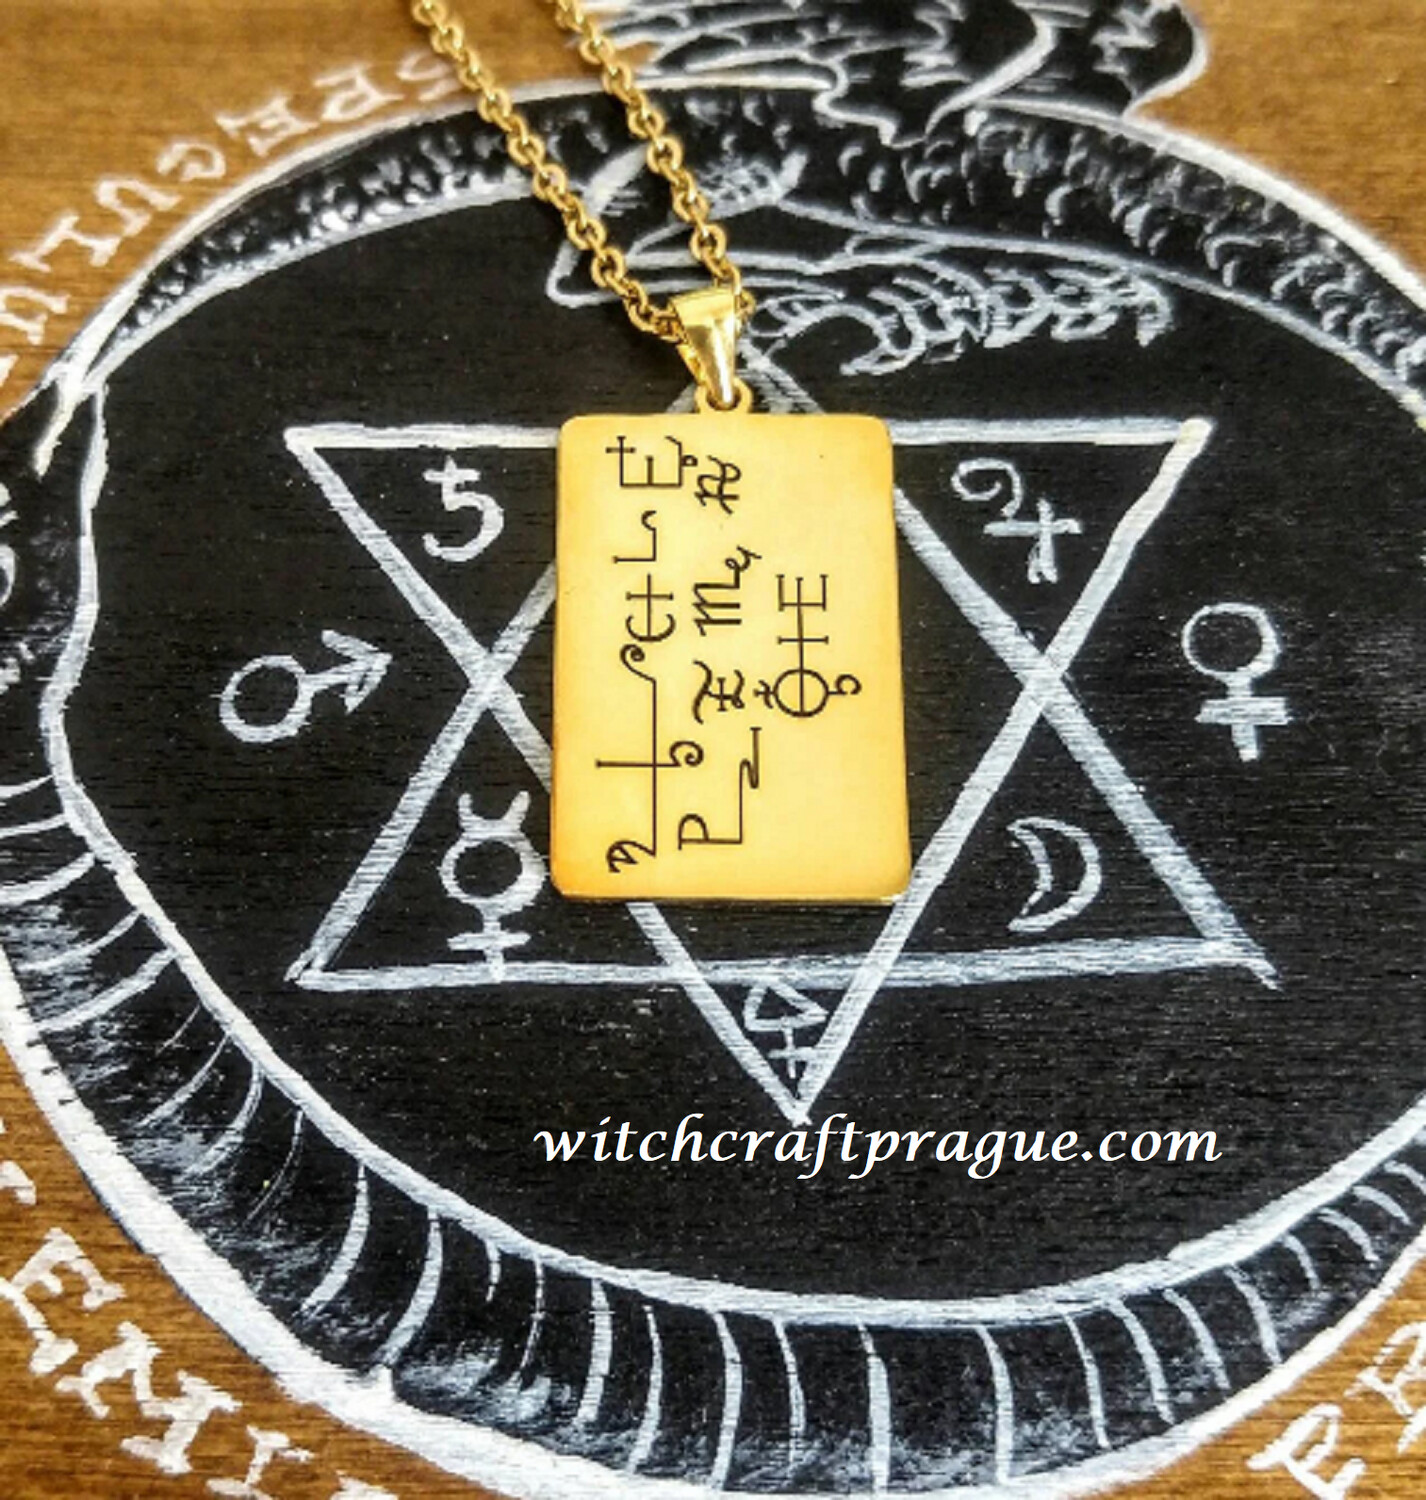 Alepta spirit amulet for abundance and protection